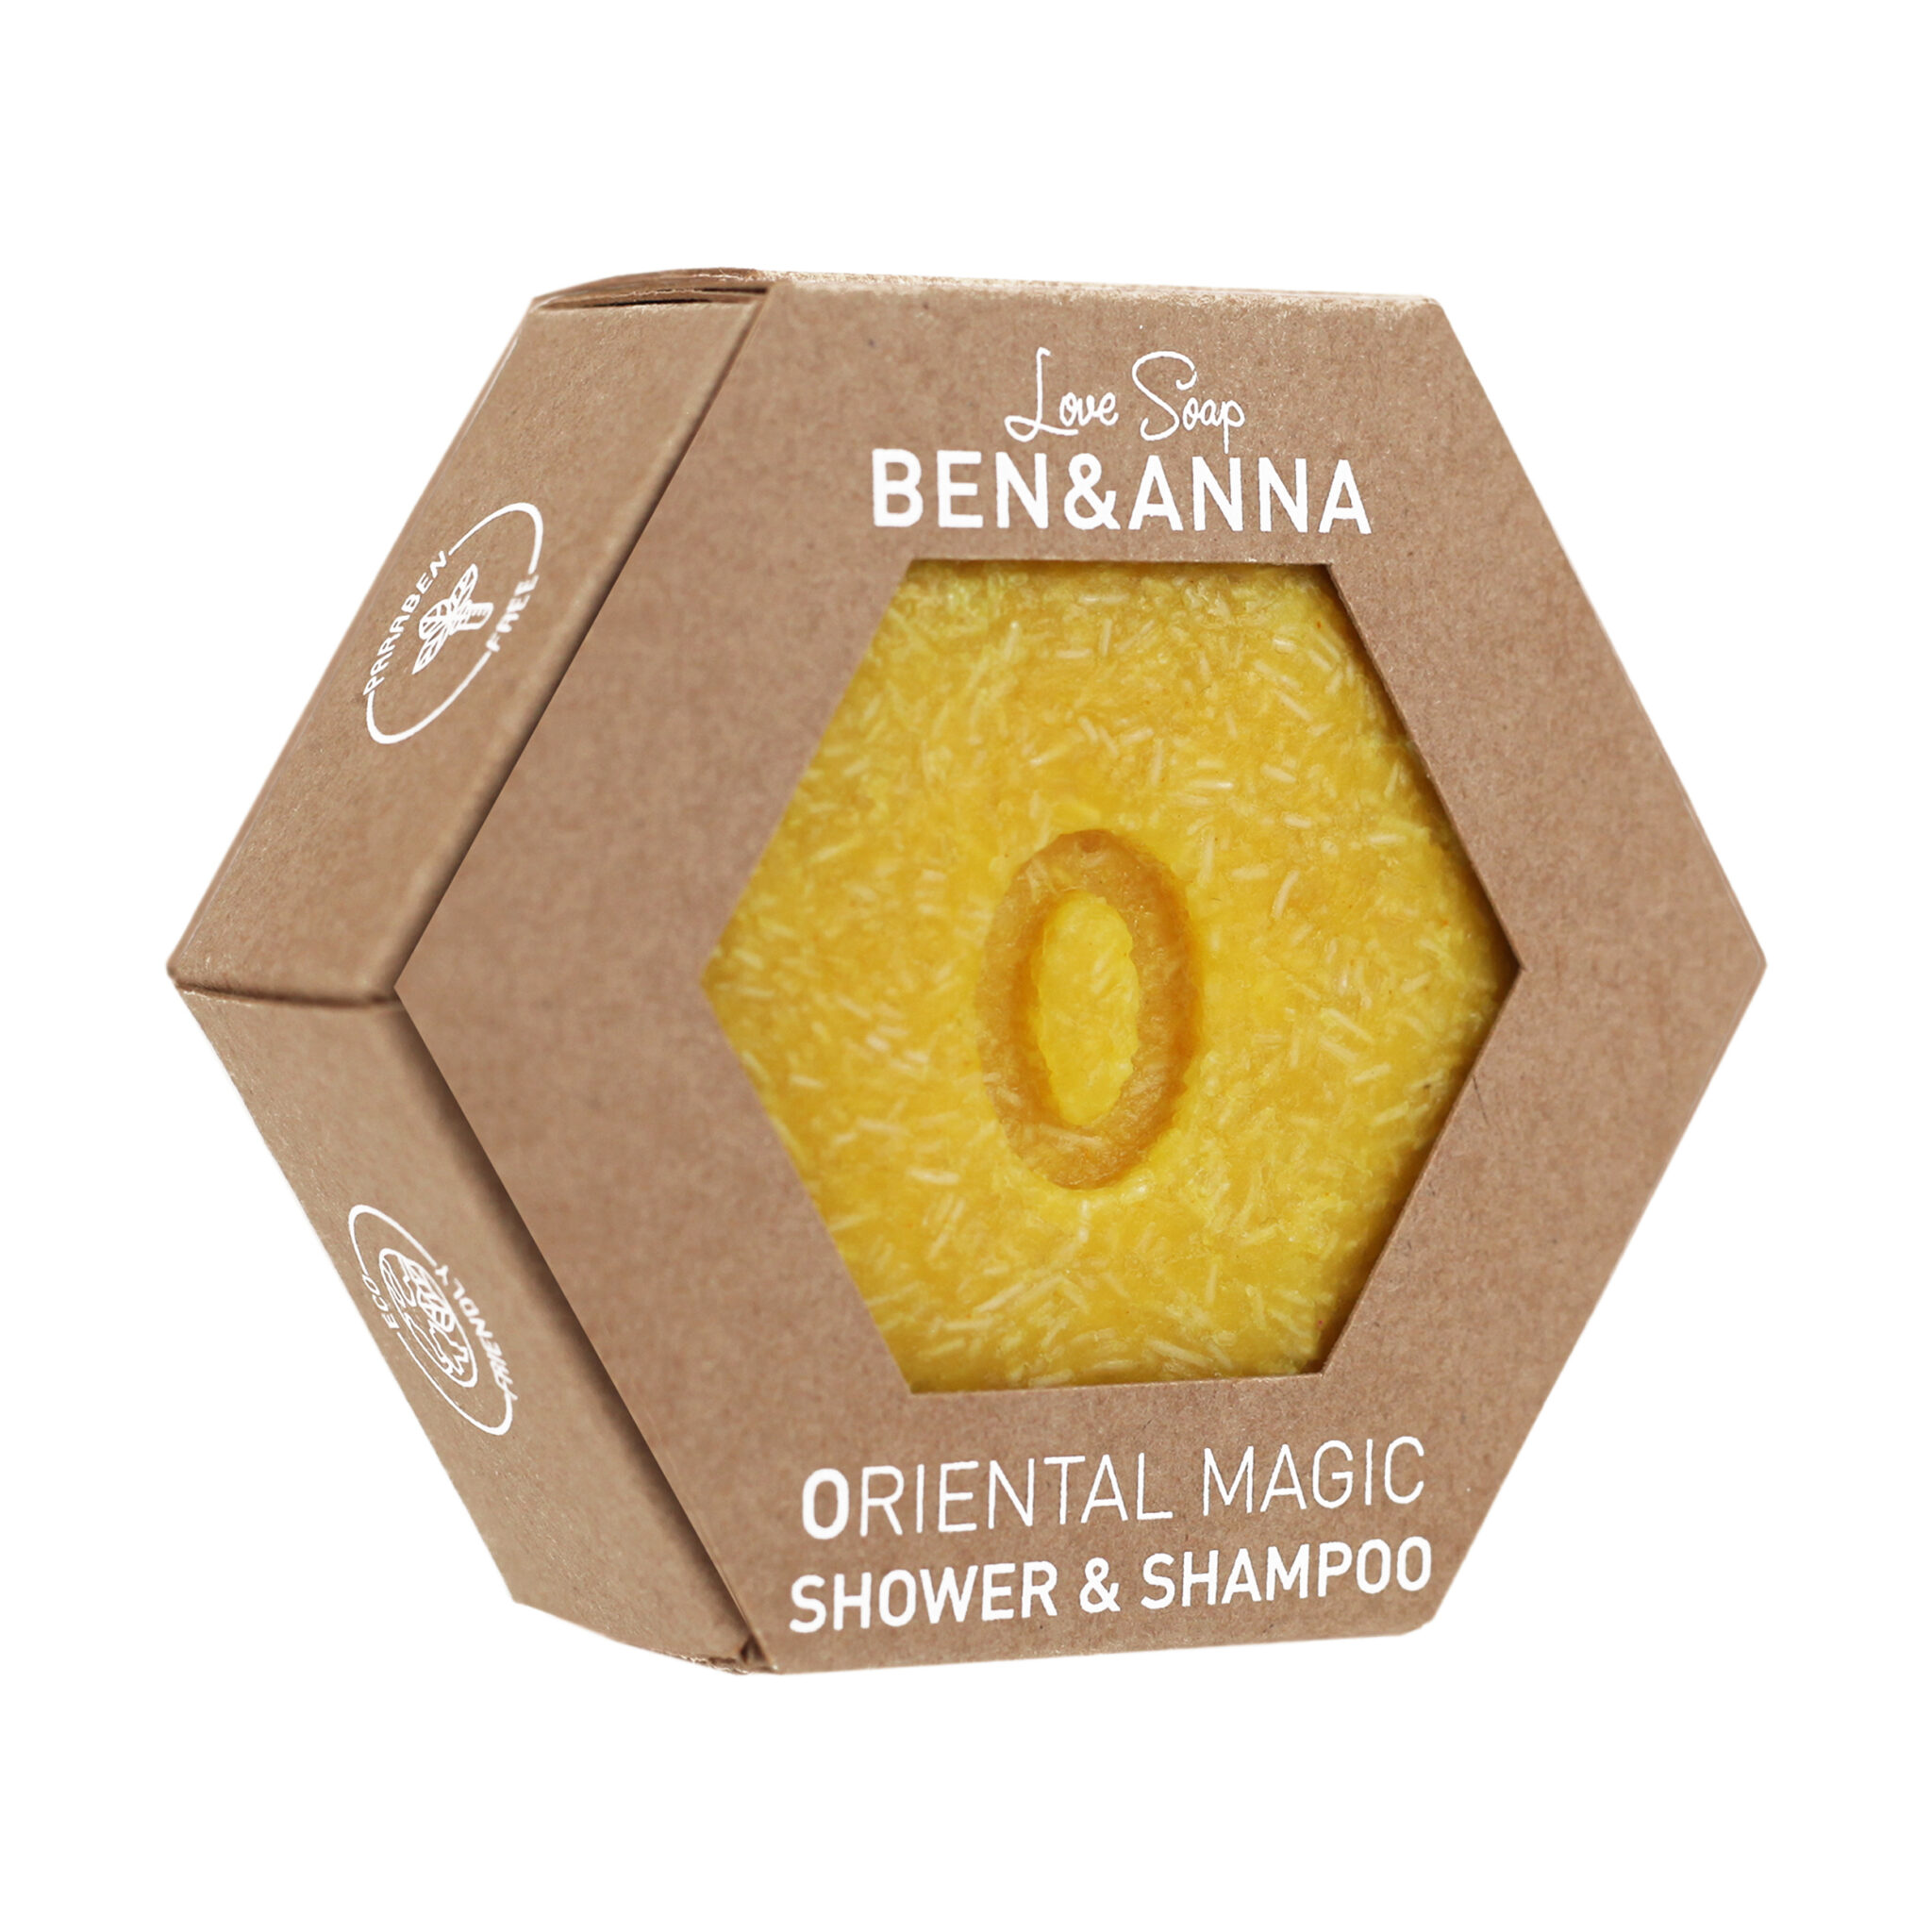 Ben & Anna Love Soap Oriental Magic